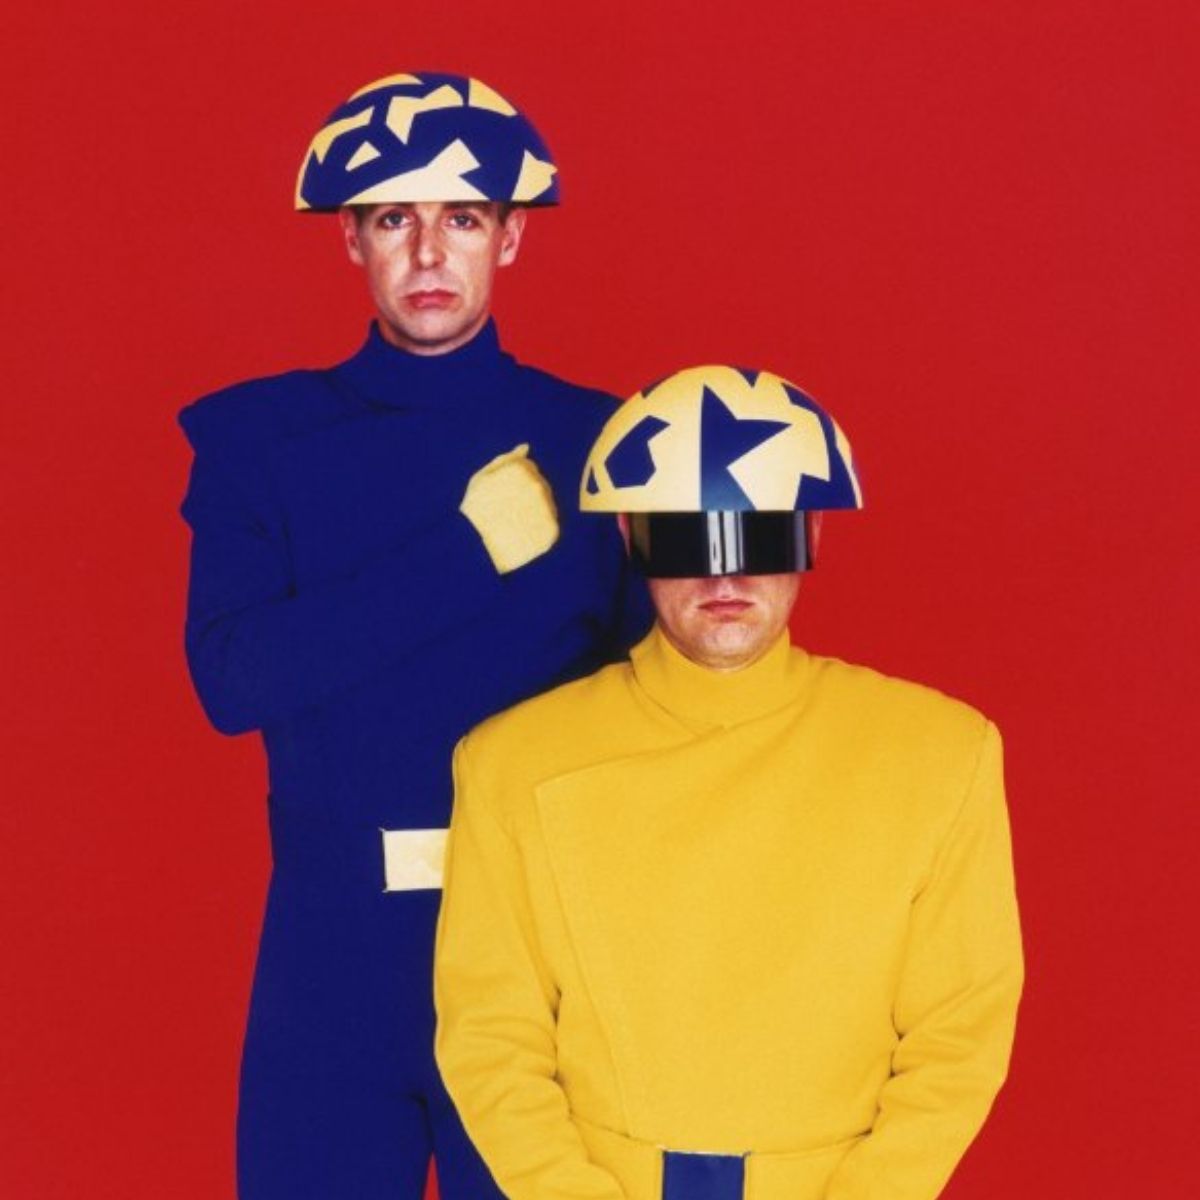 Cover art for the Pet Shop Boys' single "Go West."